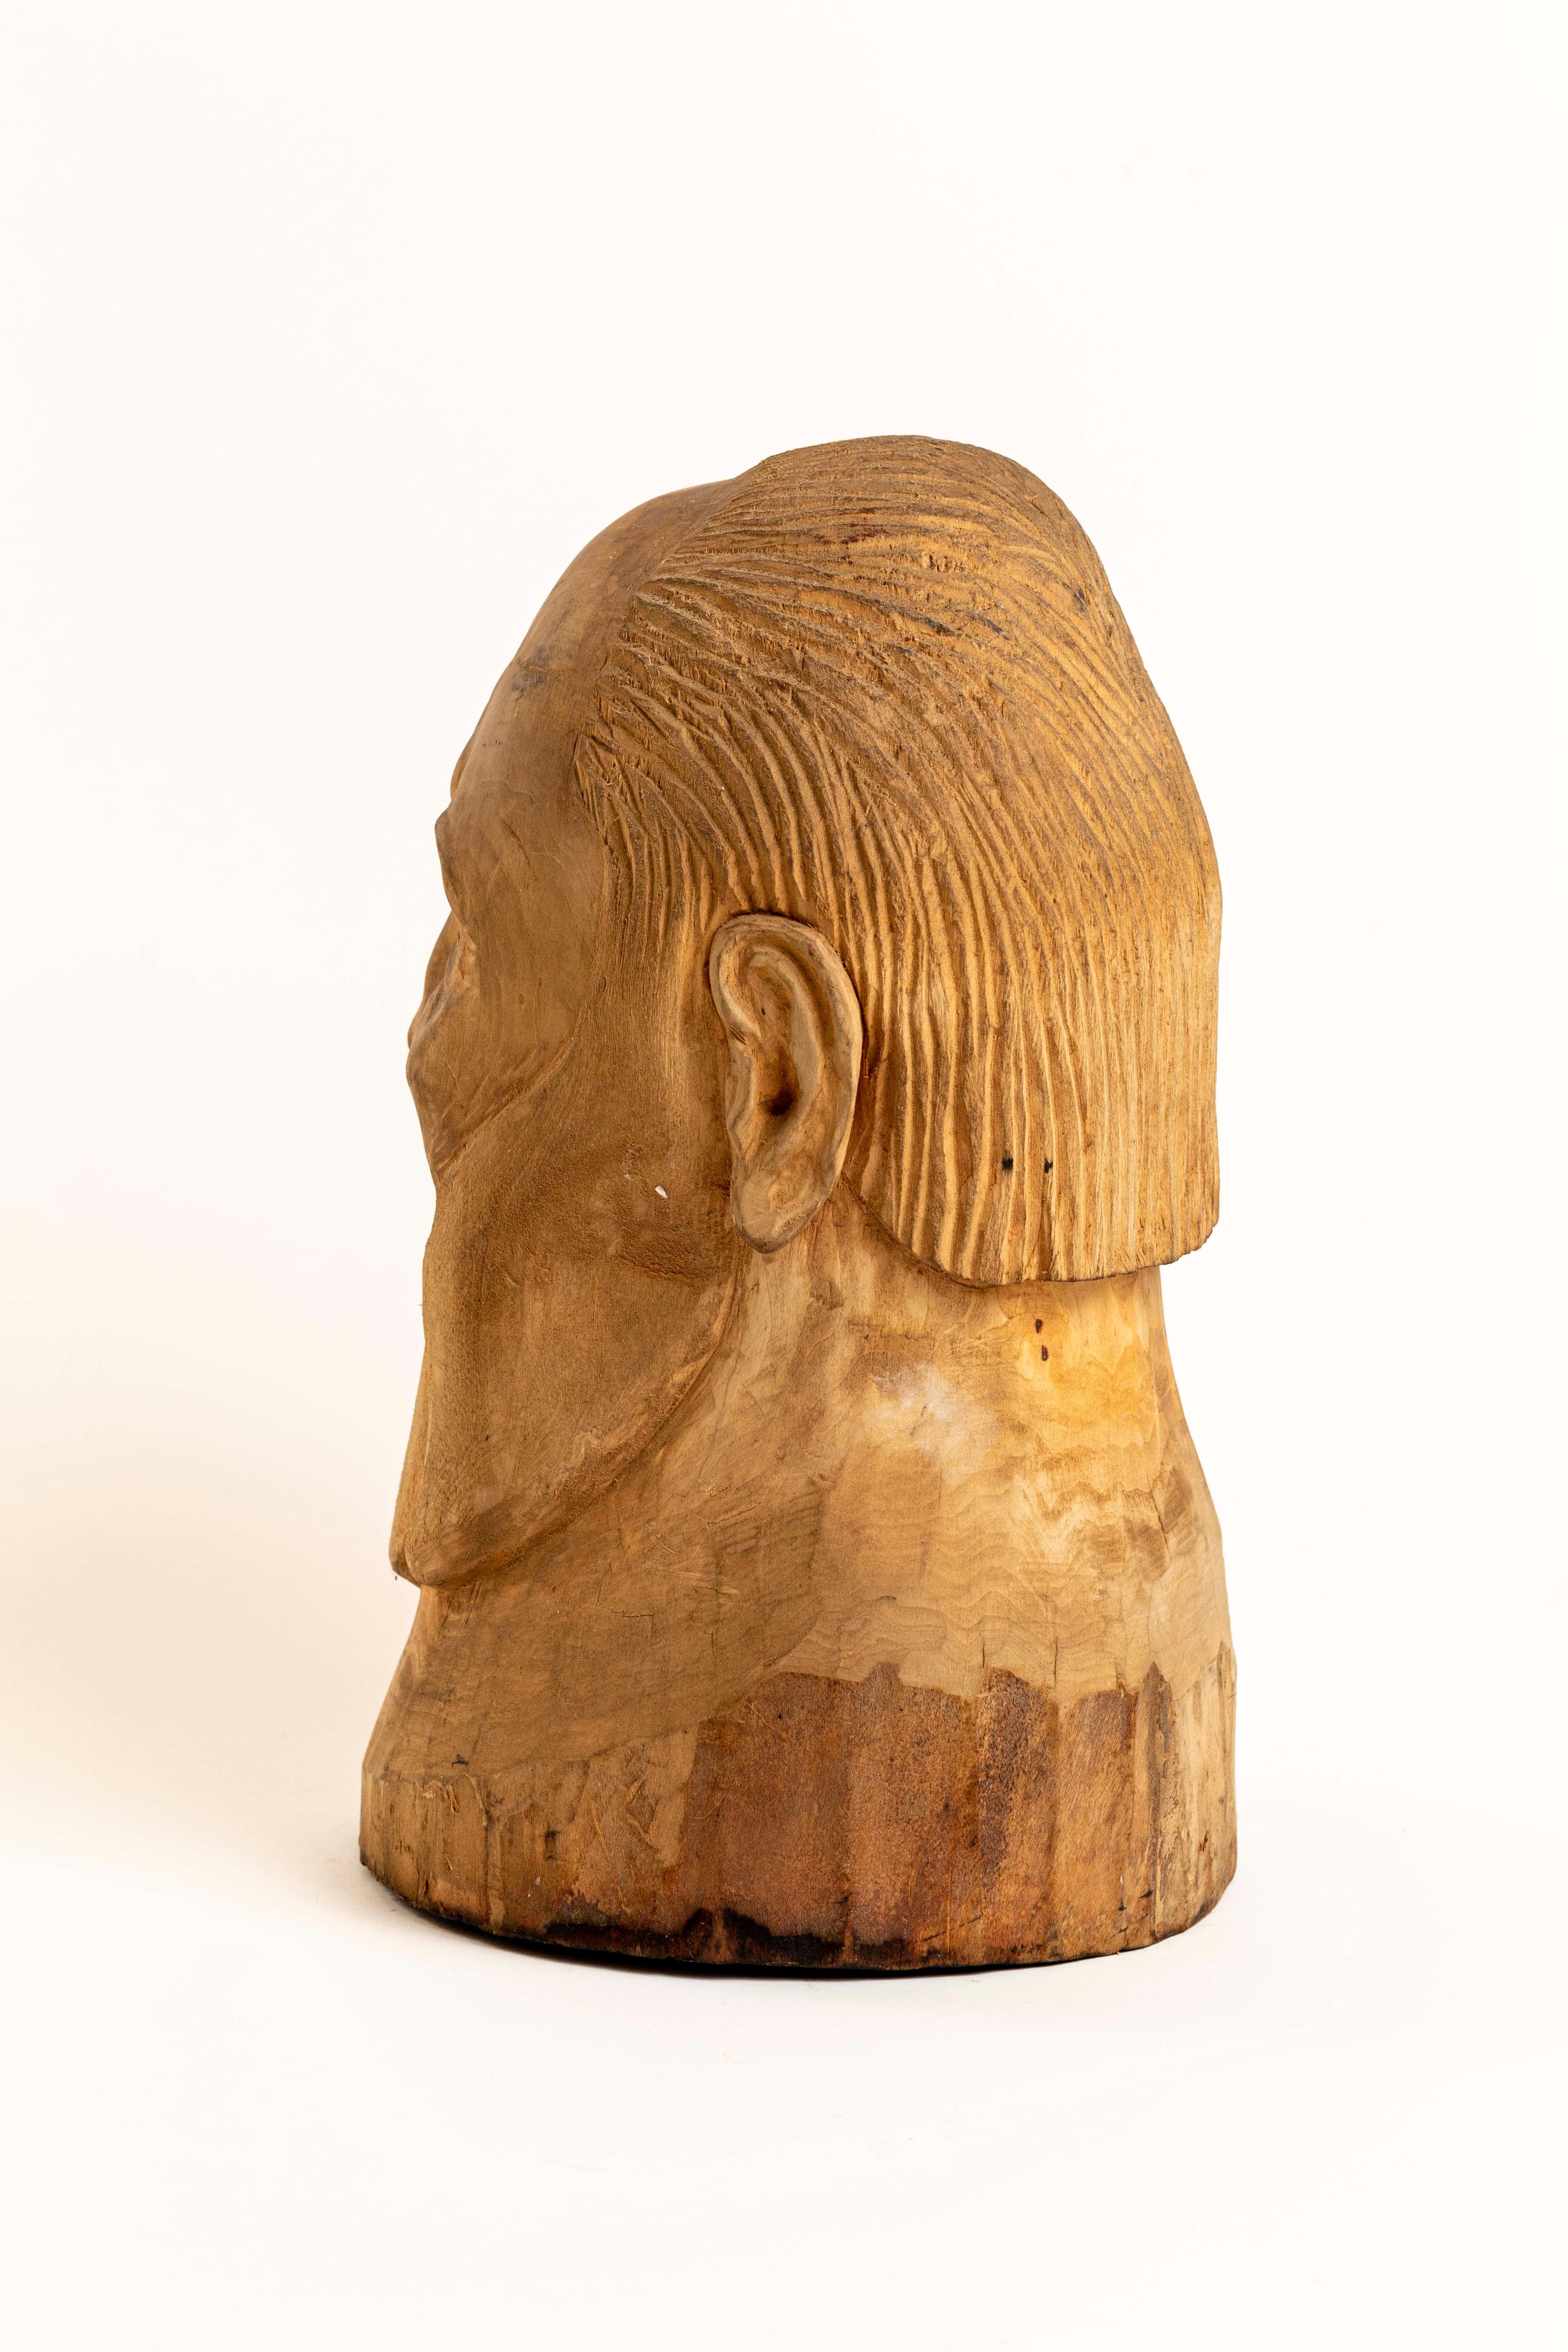 20th Century Hand Carved Wood Folk Art Sculpture by Duane Hansen For Sale 3